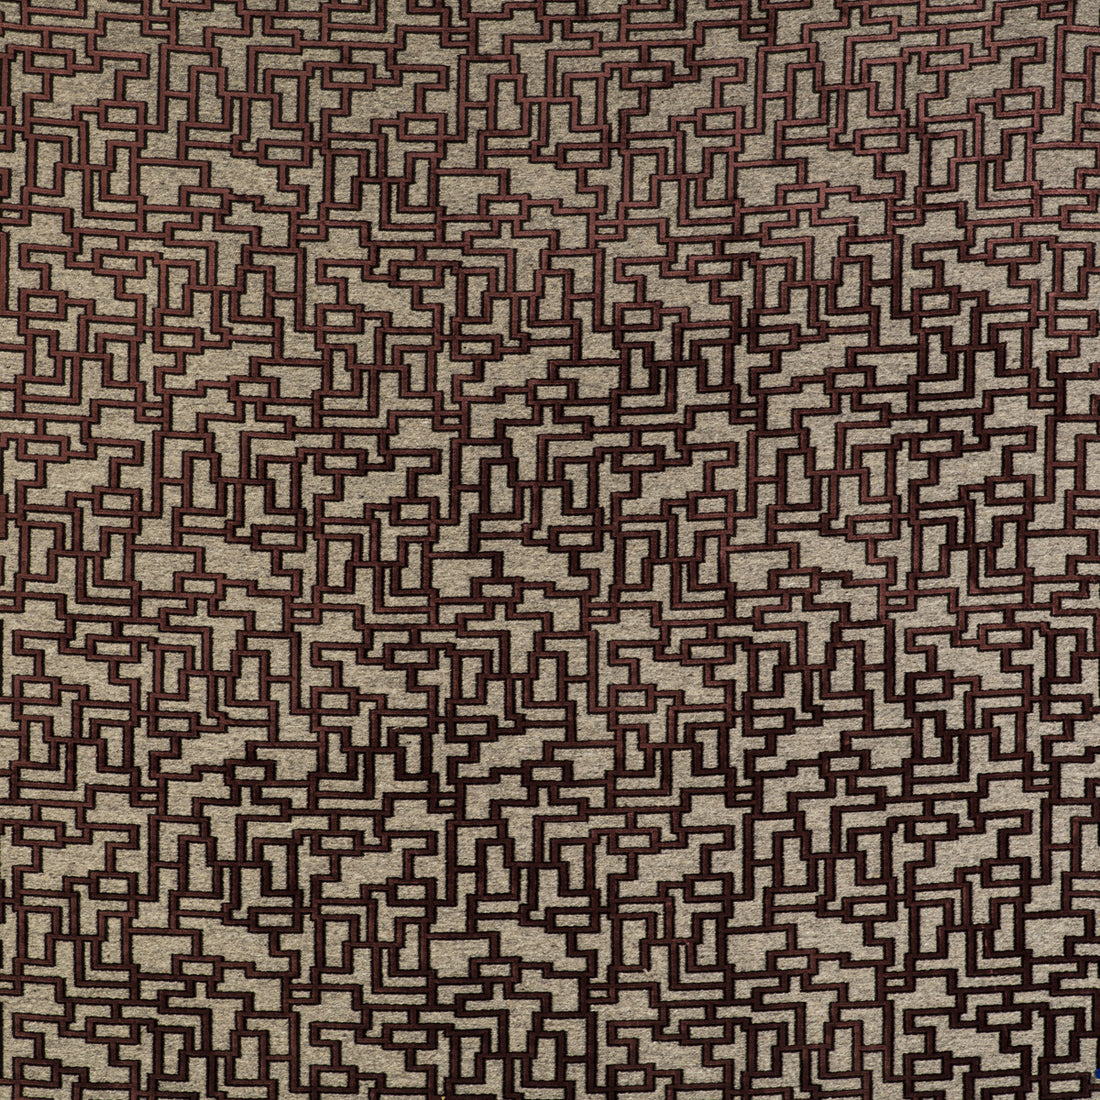 Laberinto fabric in rosa/viejo color - pattern GDT5501.003.0 - by Gaston y Daniela in the Gaston Libreria collection